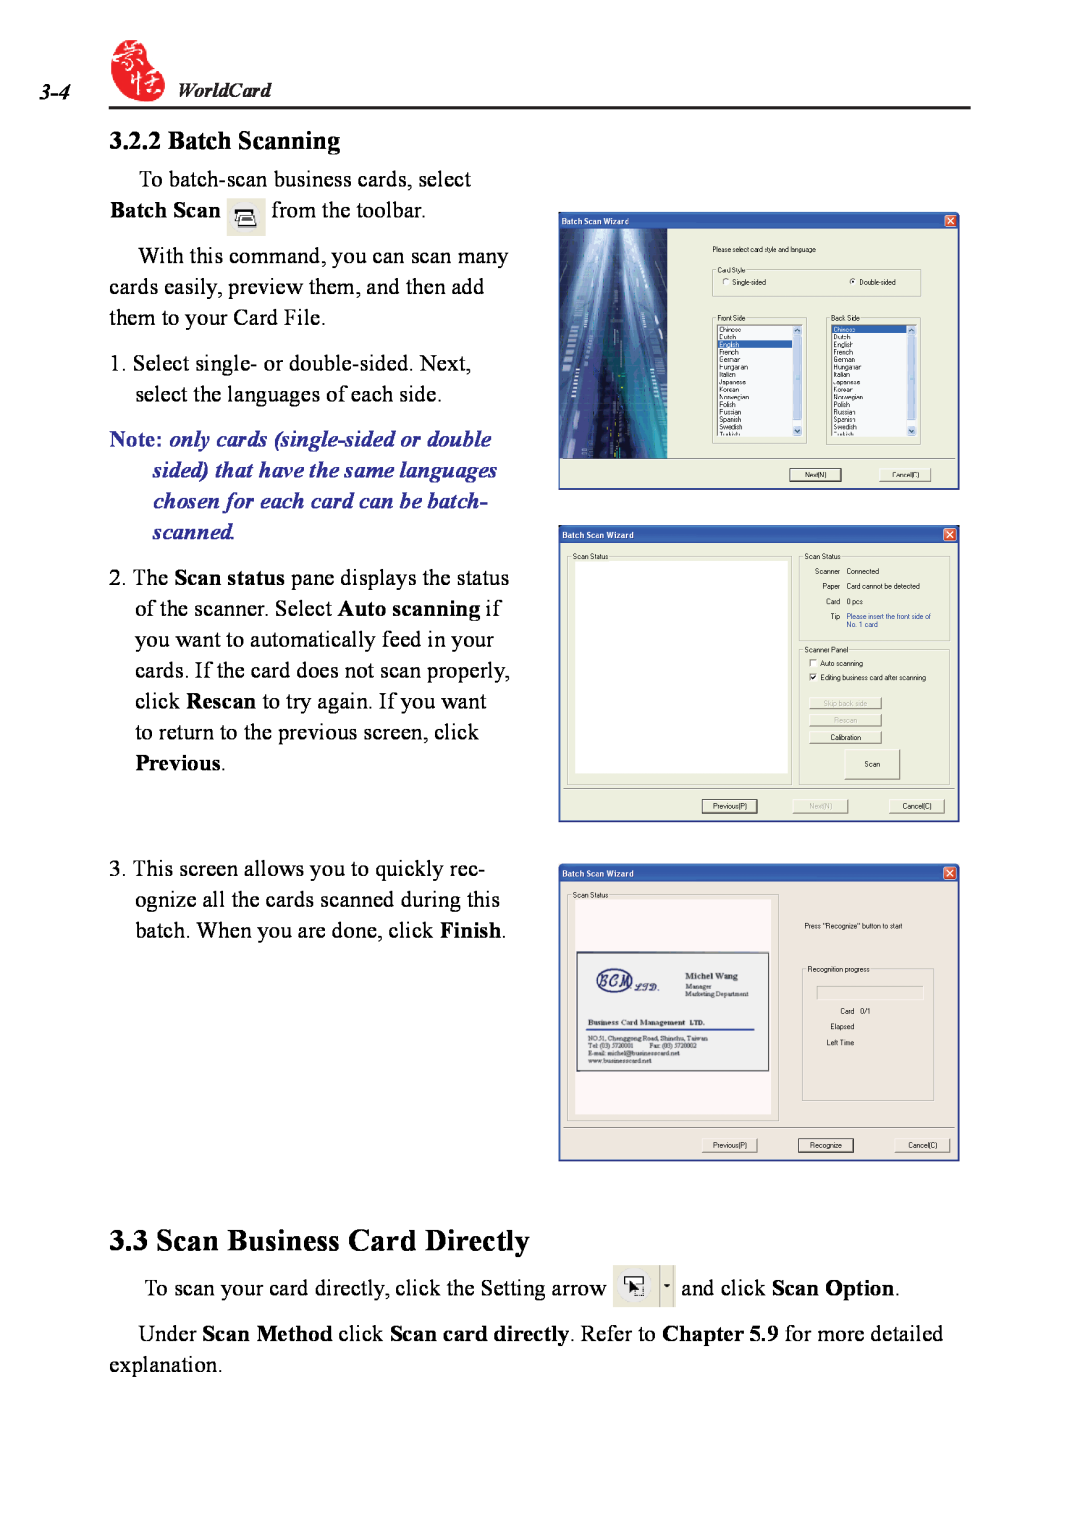 Penpower duet 2 user manual Scan Business Card Directly, Batch Scanning 